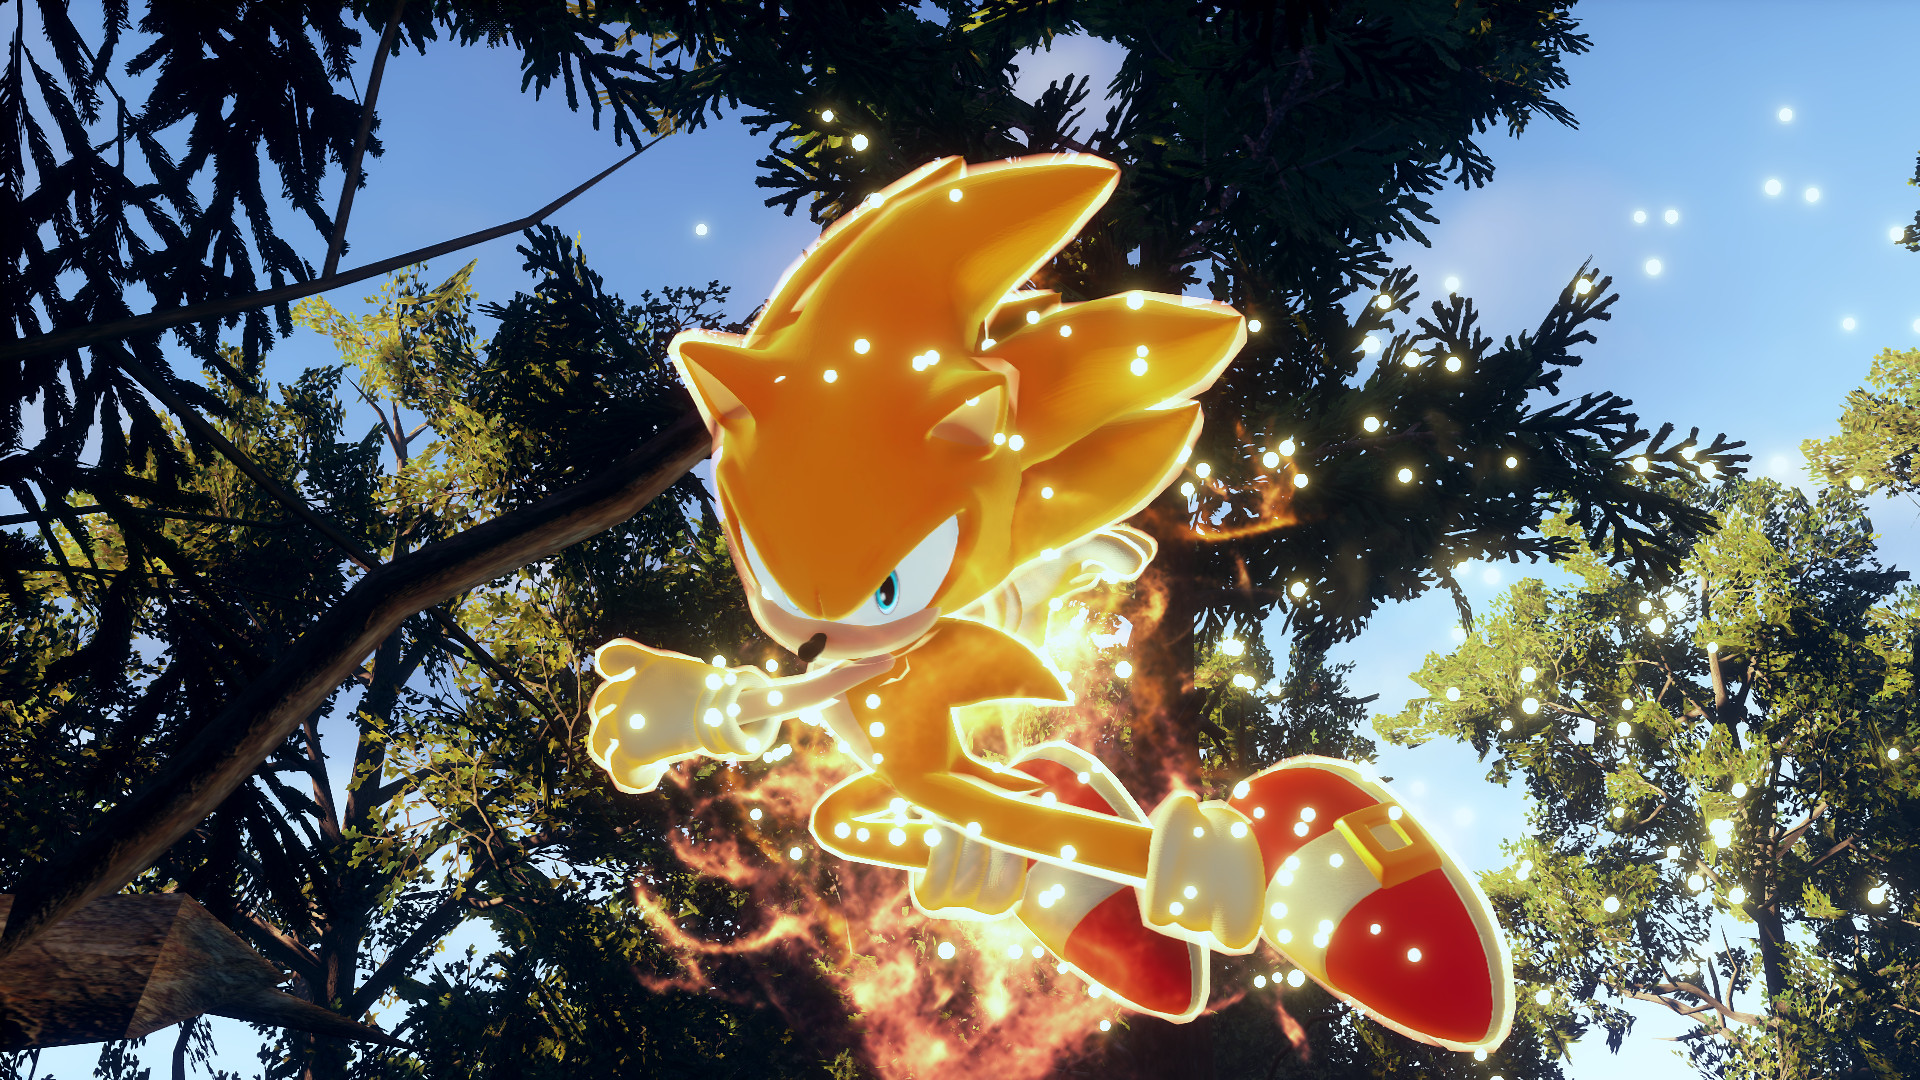 Quick Super Sonic for Sonic Frontiers Update 3! #sonicfrontiers  #sonicfanart #sonicthehedgehog #sonic #supersonic #supersonicart…